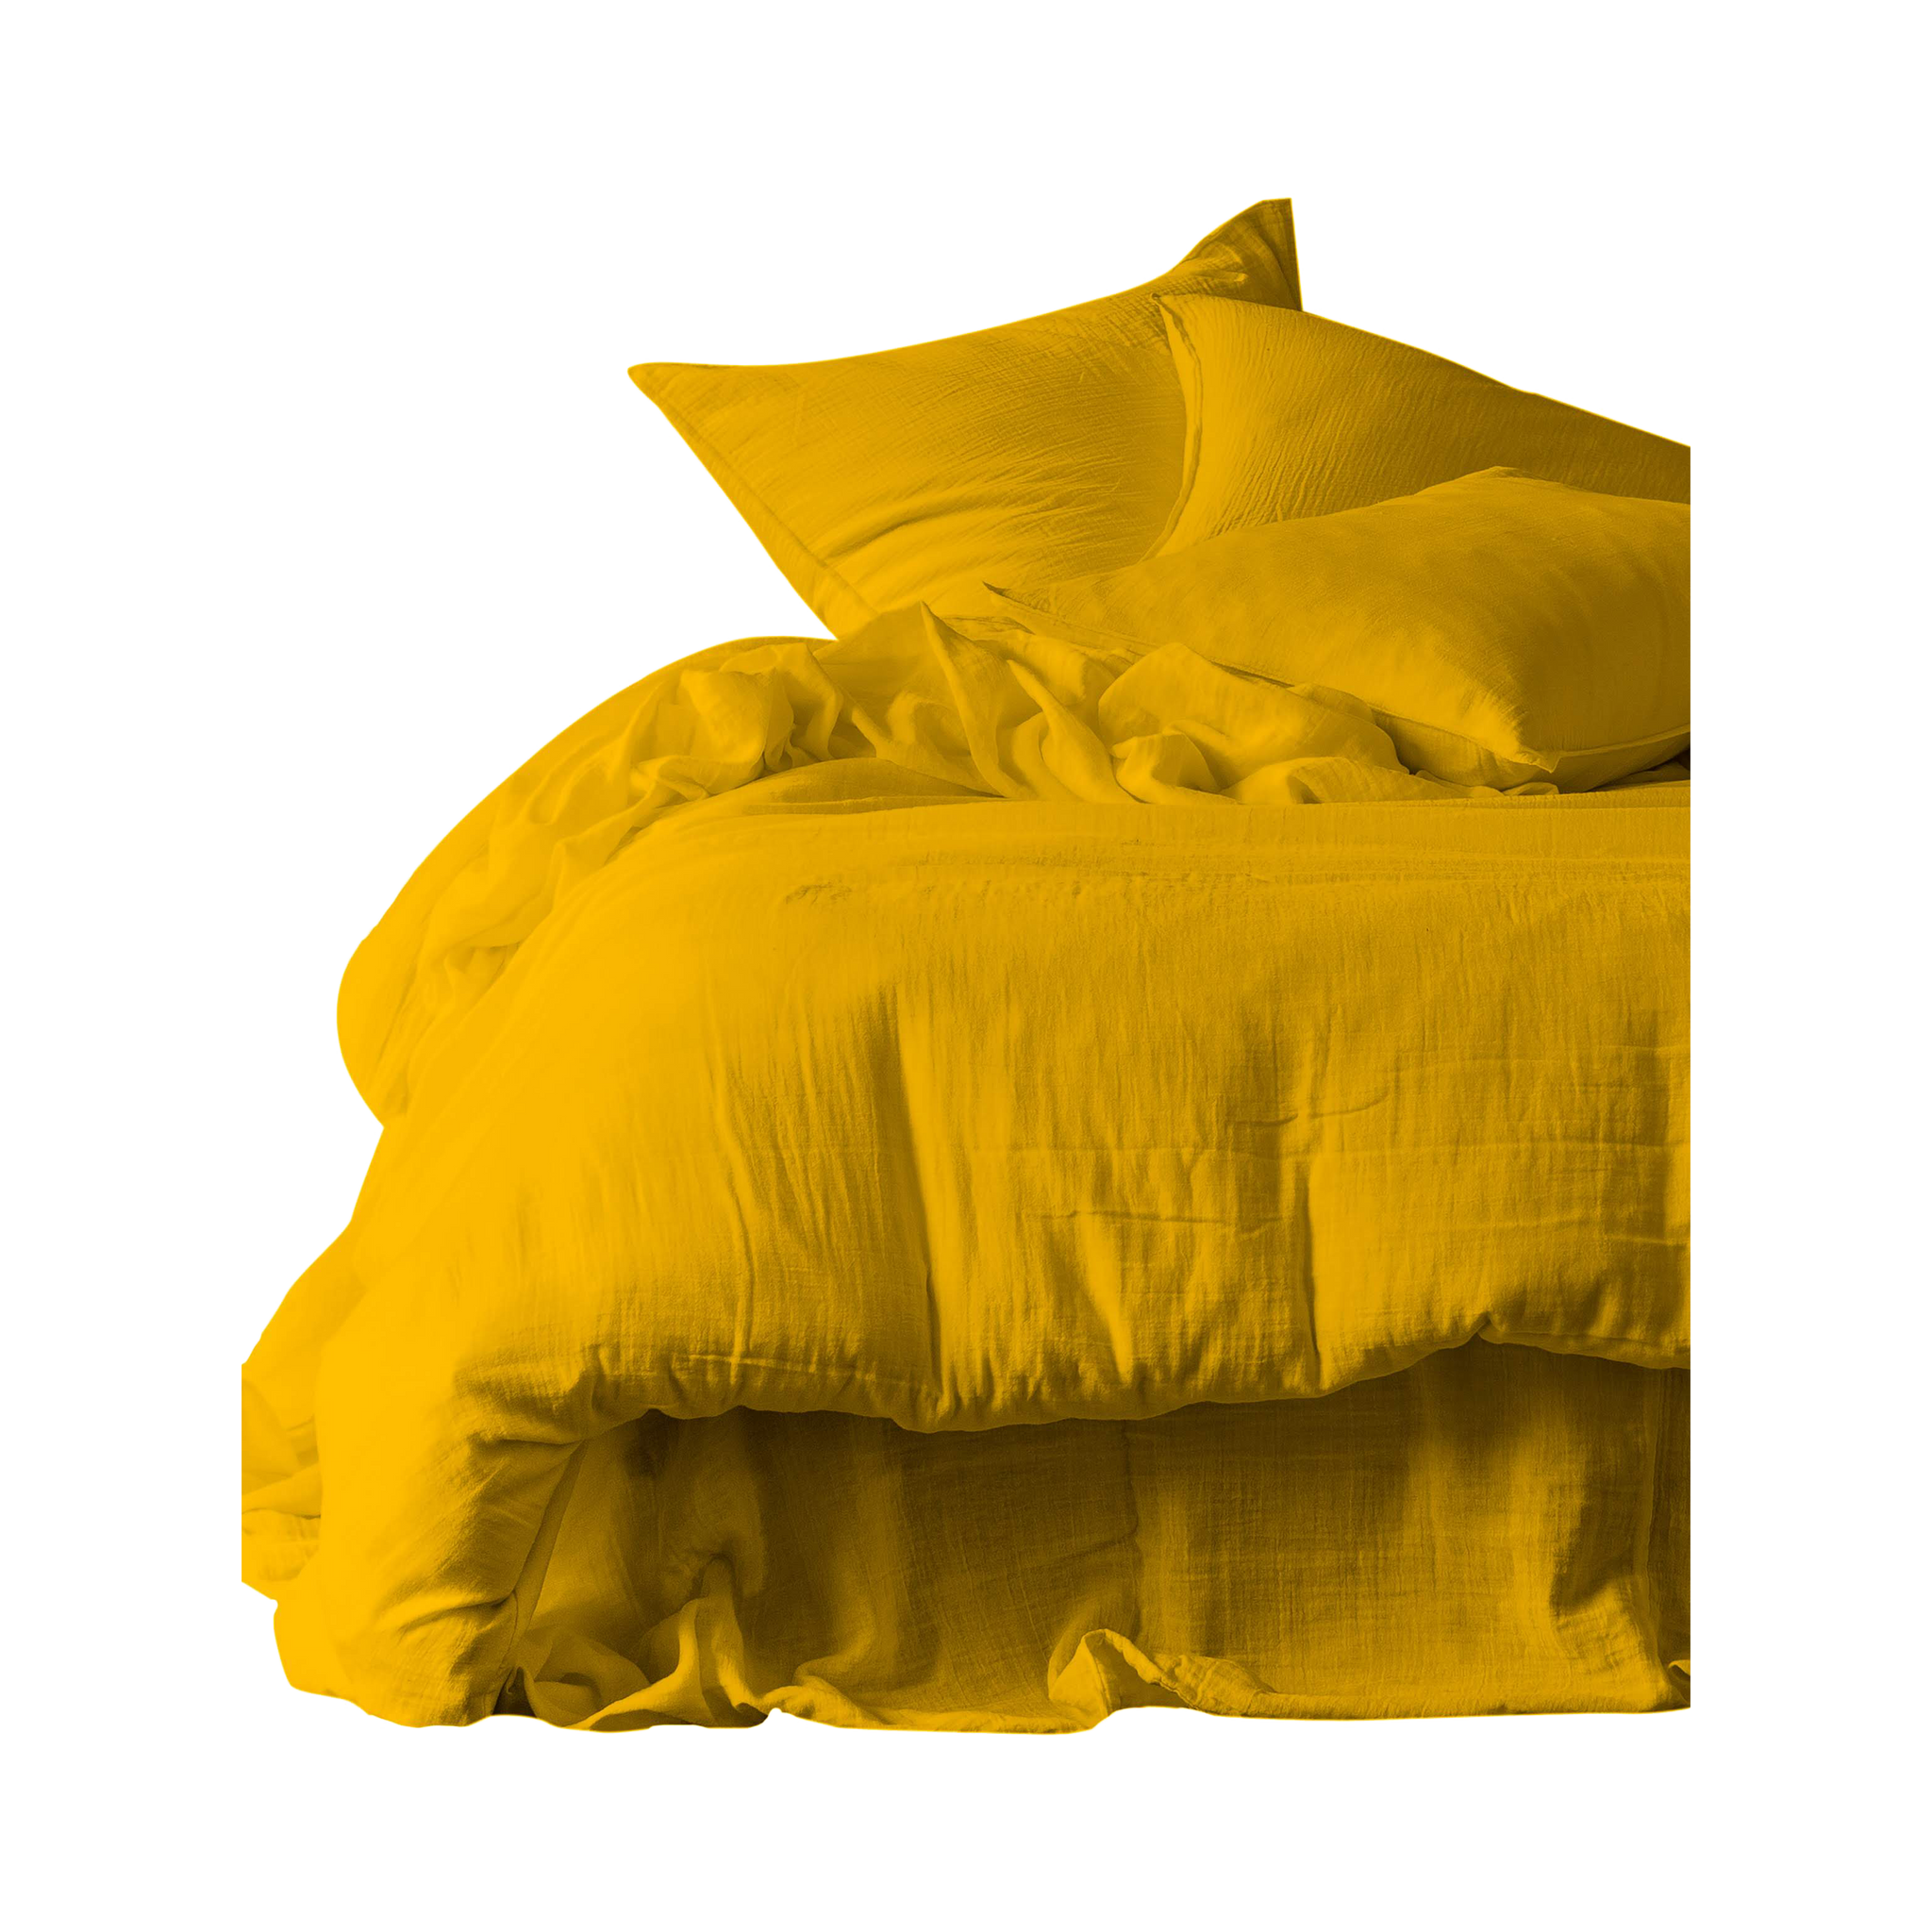 Haomy DILI Bed linen